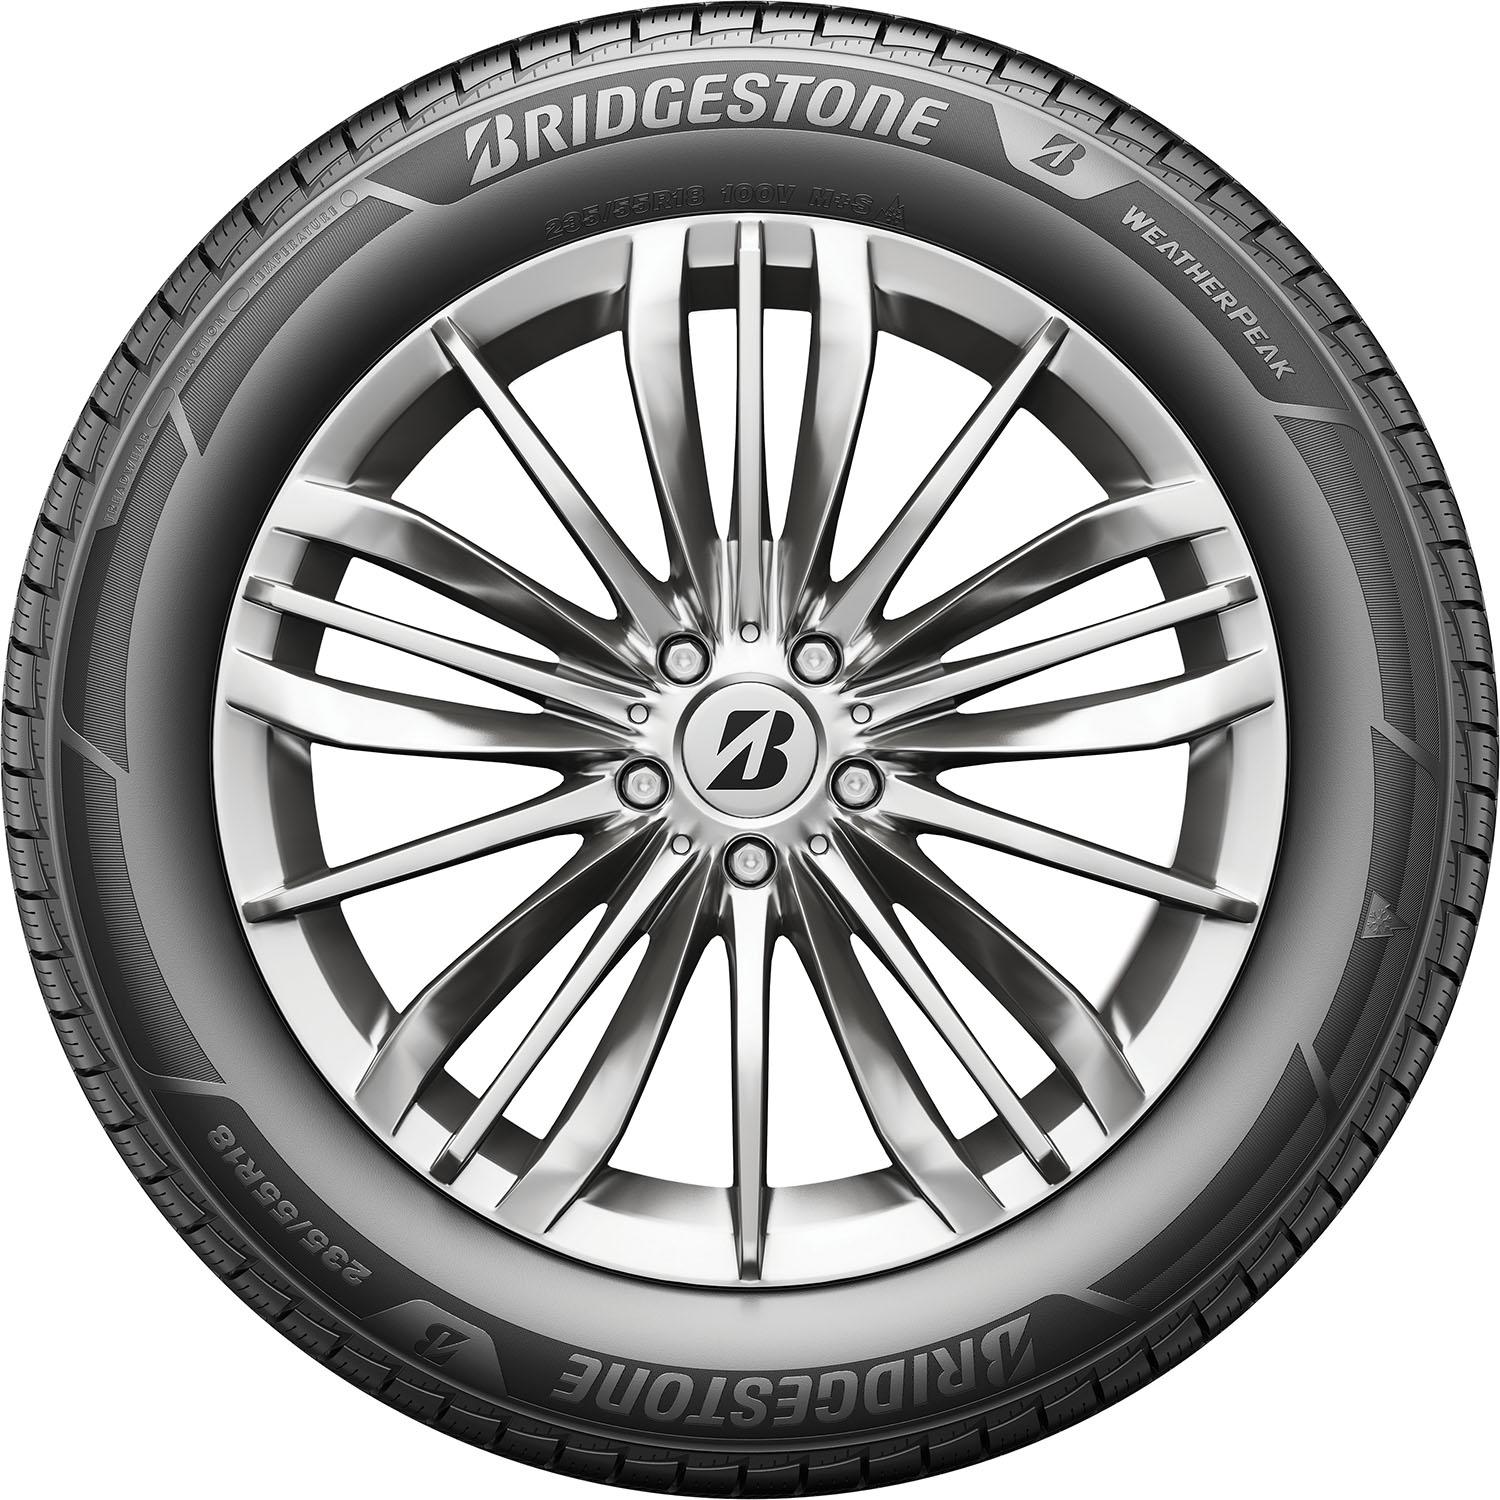 Bridgestone Weatherpeak 185/55R15 82V Highway Terrain Passenger Car Tires